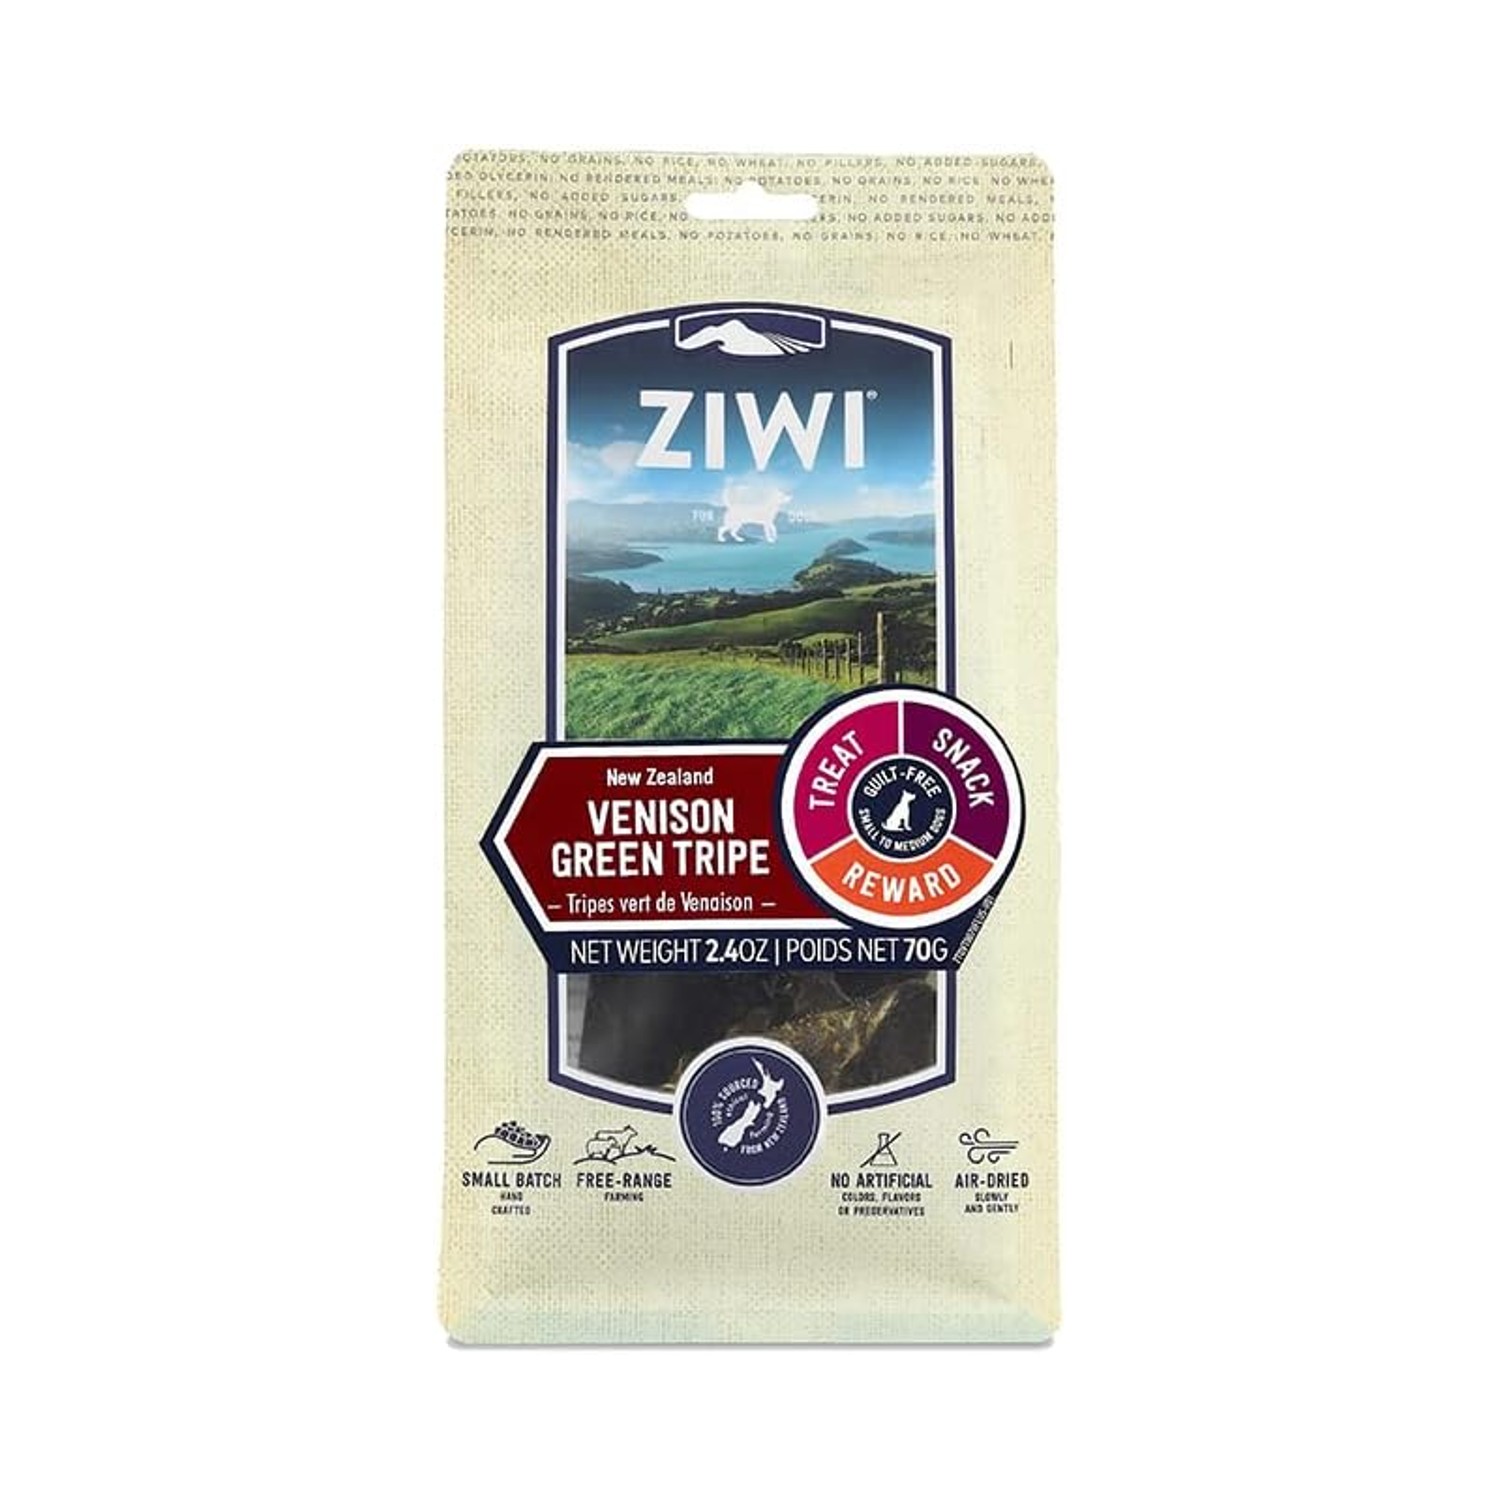 ZIWI All Natural Air-Dried Grain-free Chew Dog Treats - Venison Green Tripe